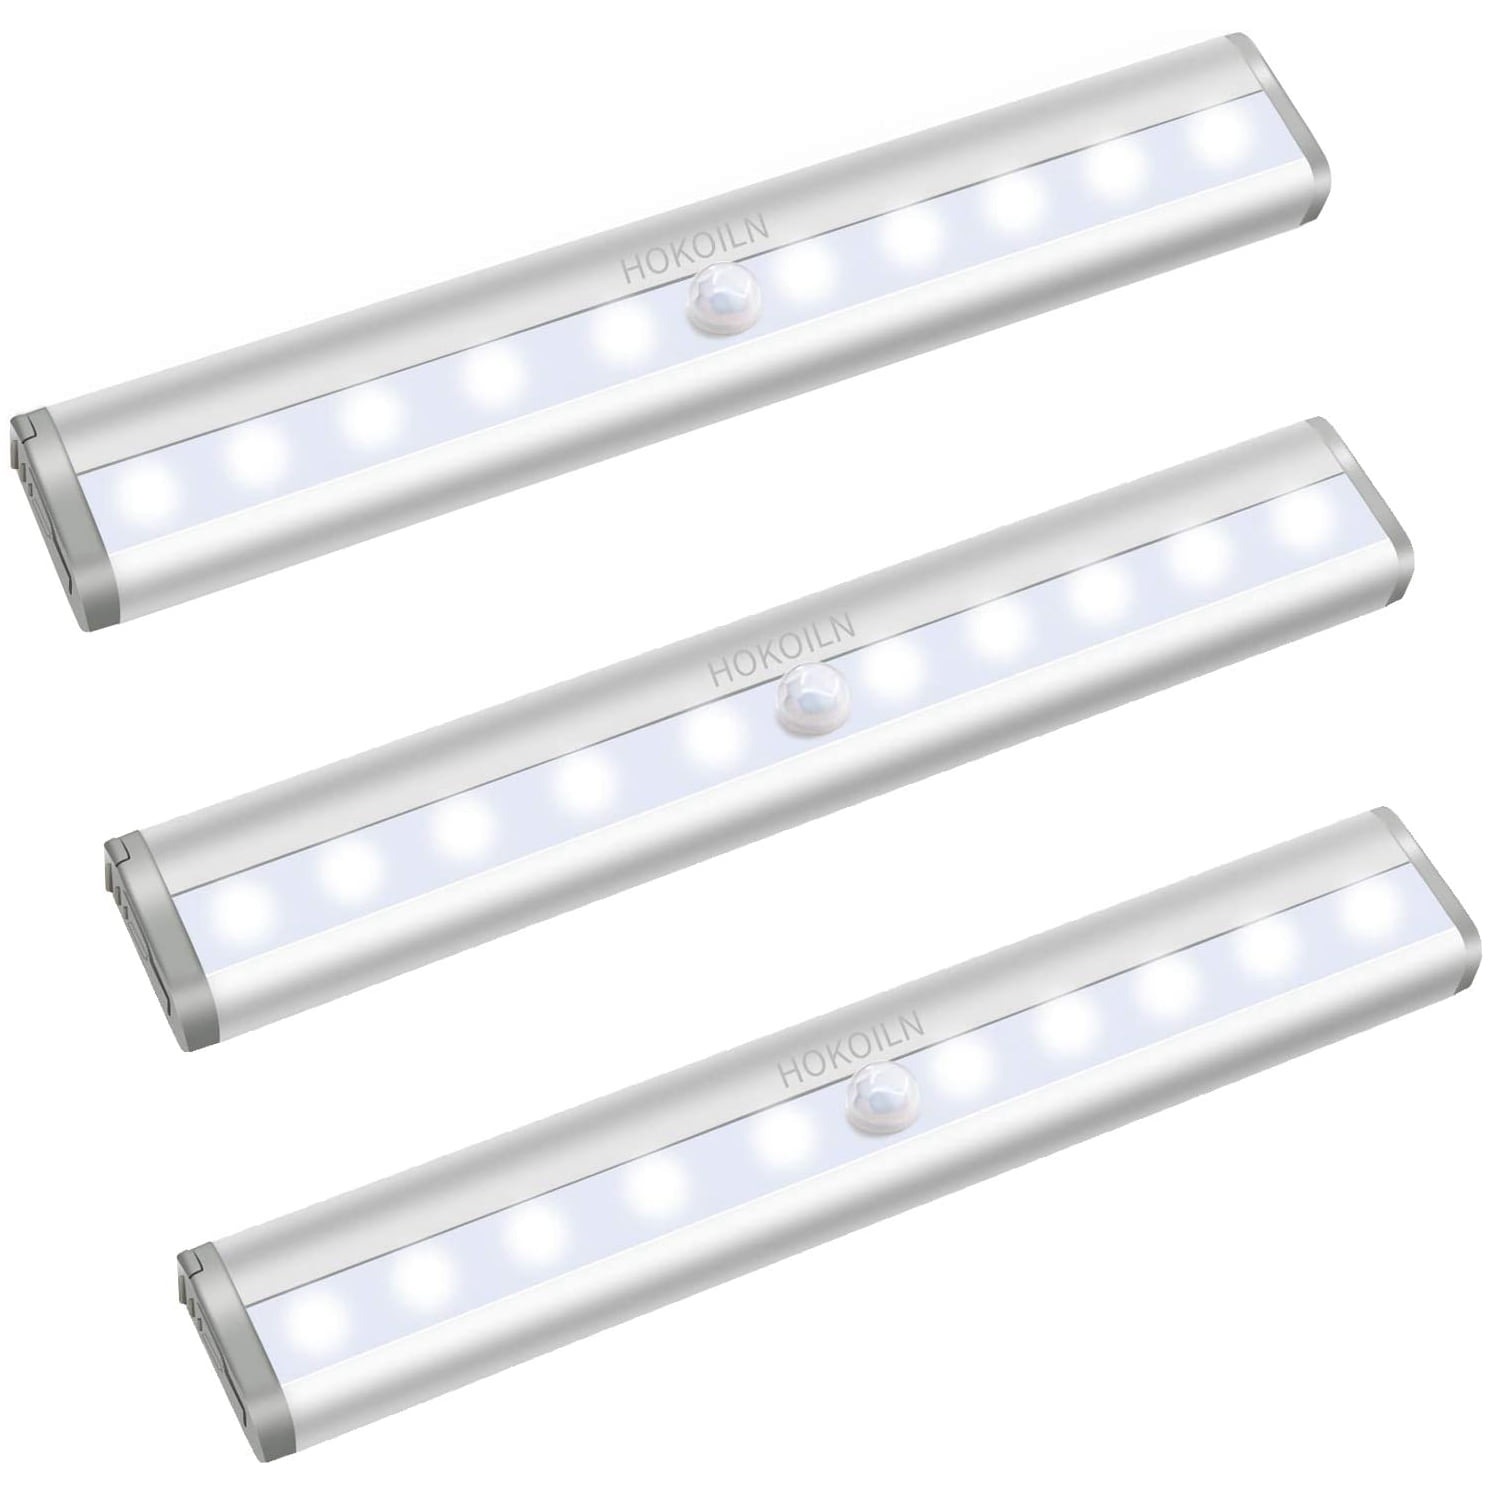 Details about   LED PIR Closet Light Motion Sensor Rechargeable USB Wireless Lamp Strip V0A4